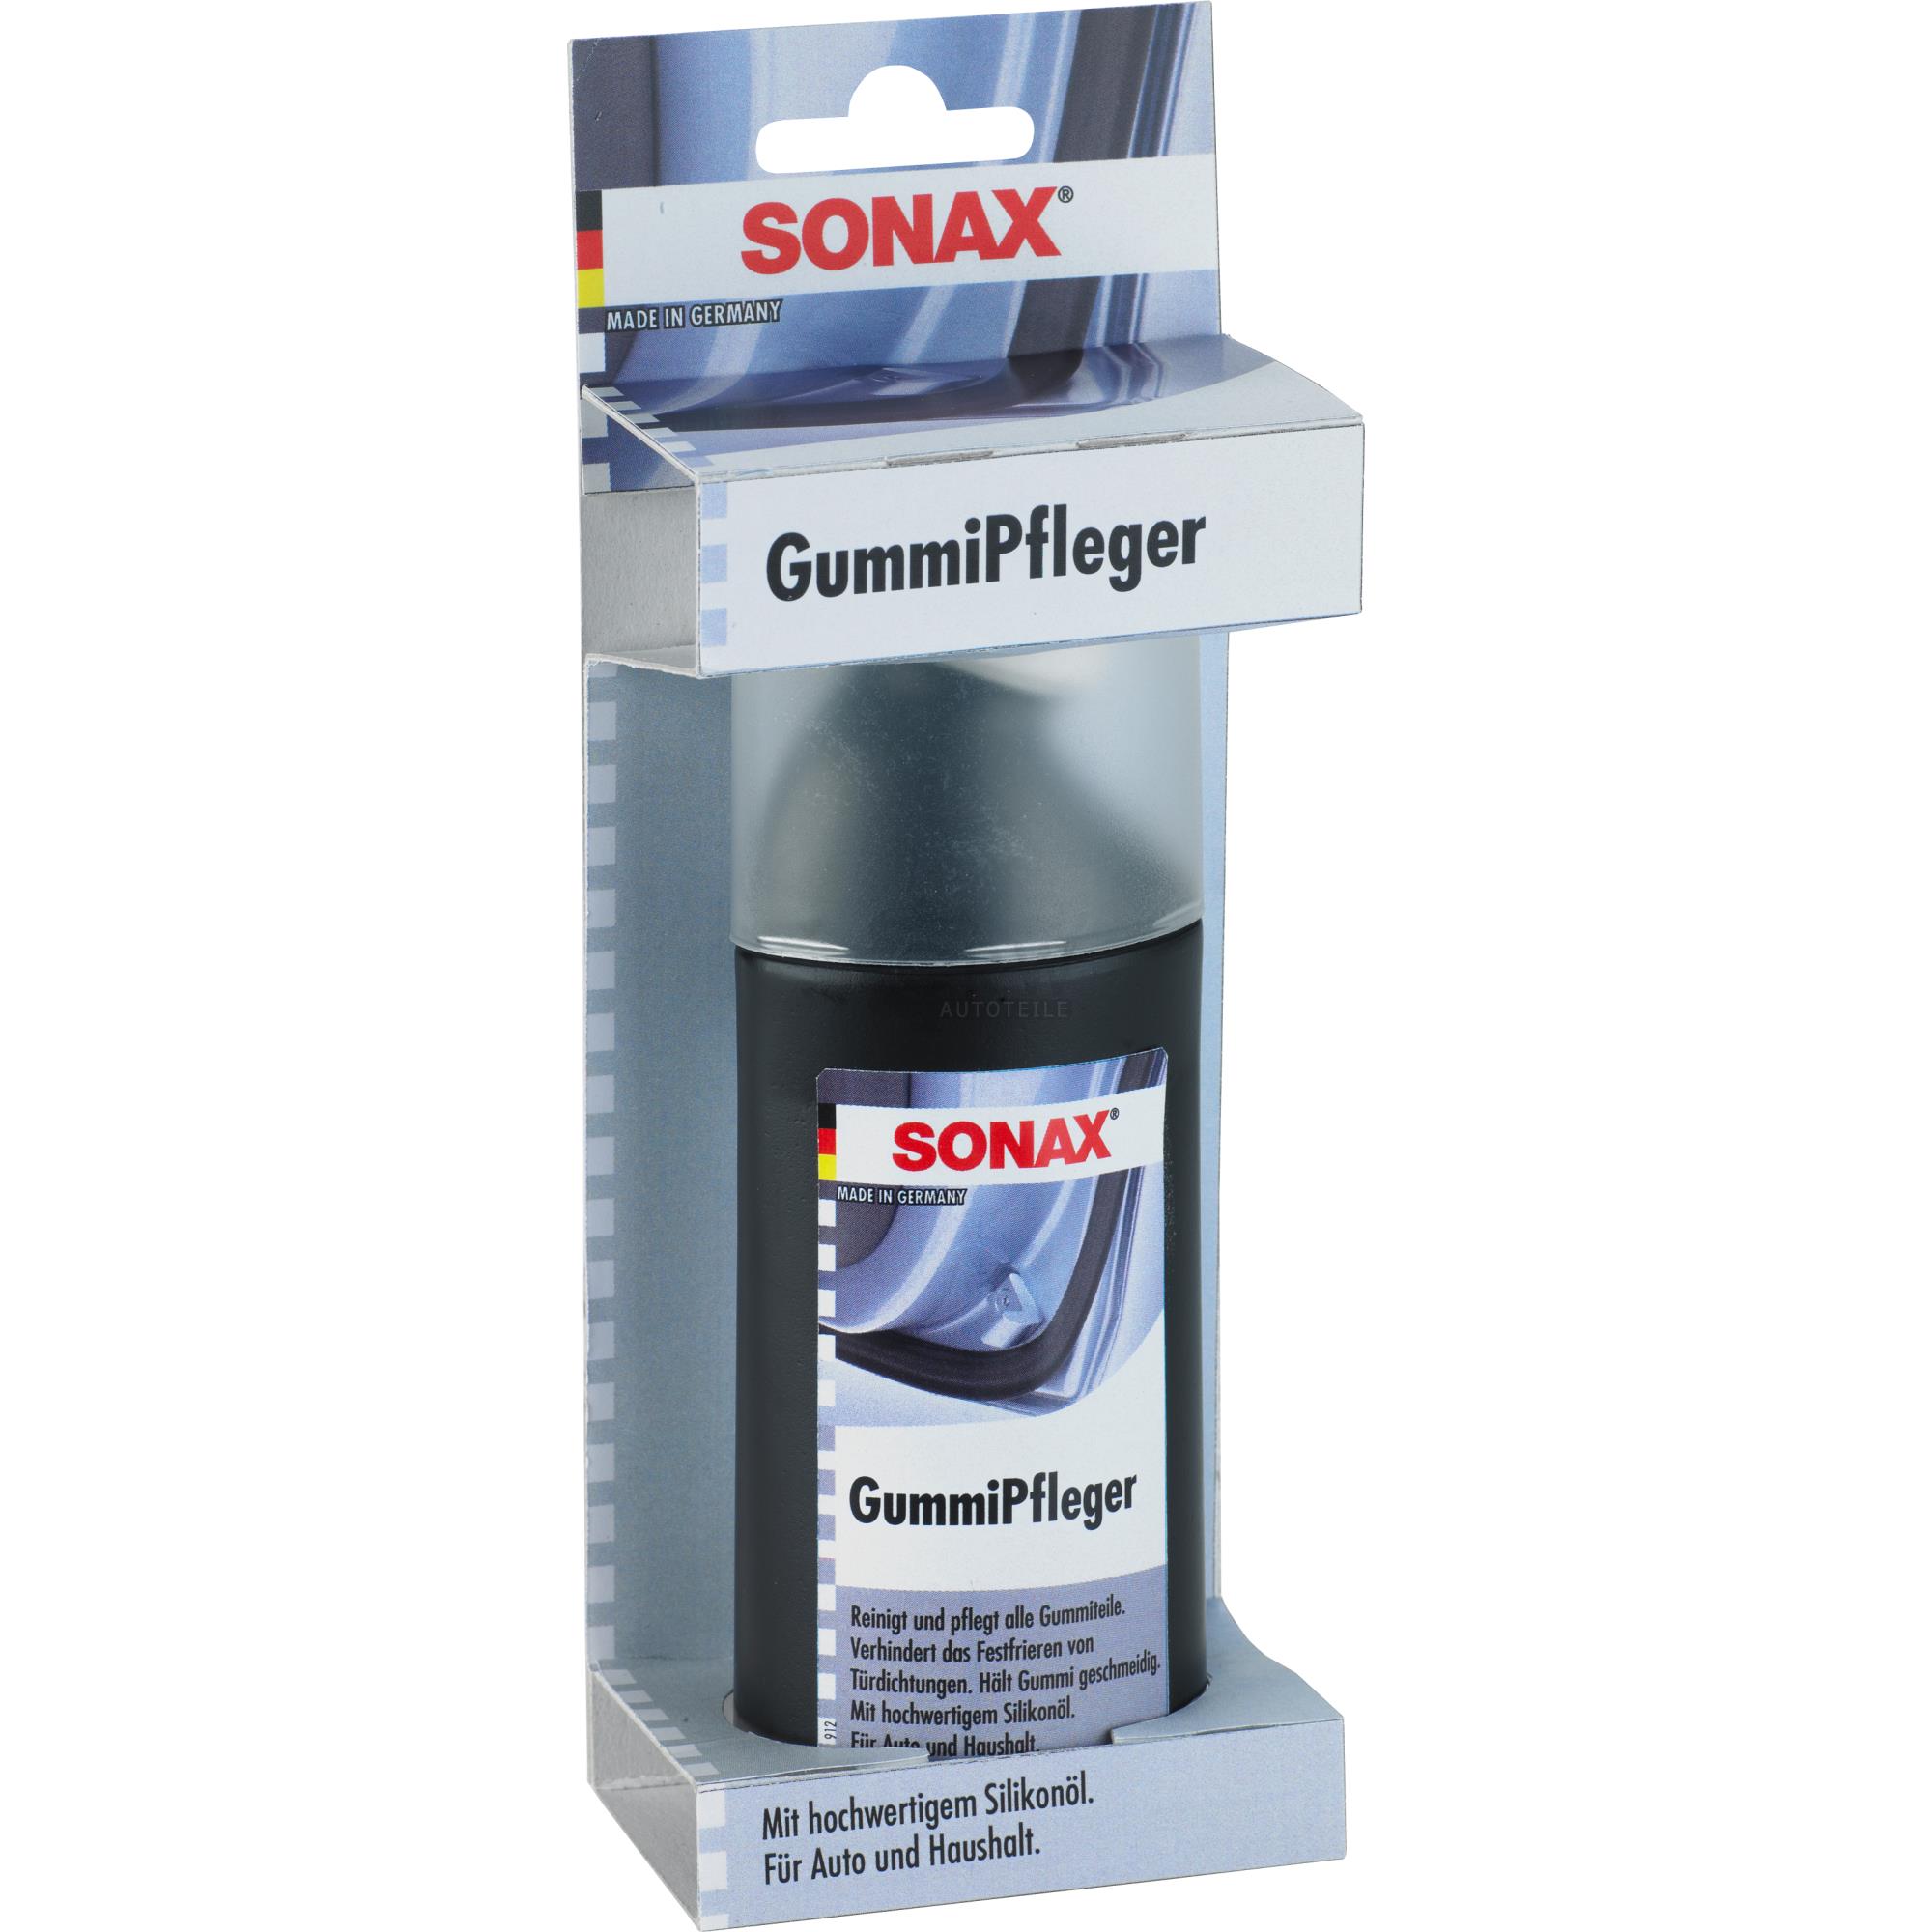 SONAX GummiPfleger Gummi Pflegemittel  Autopflege Winter care100 ml